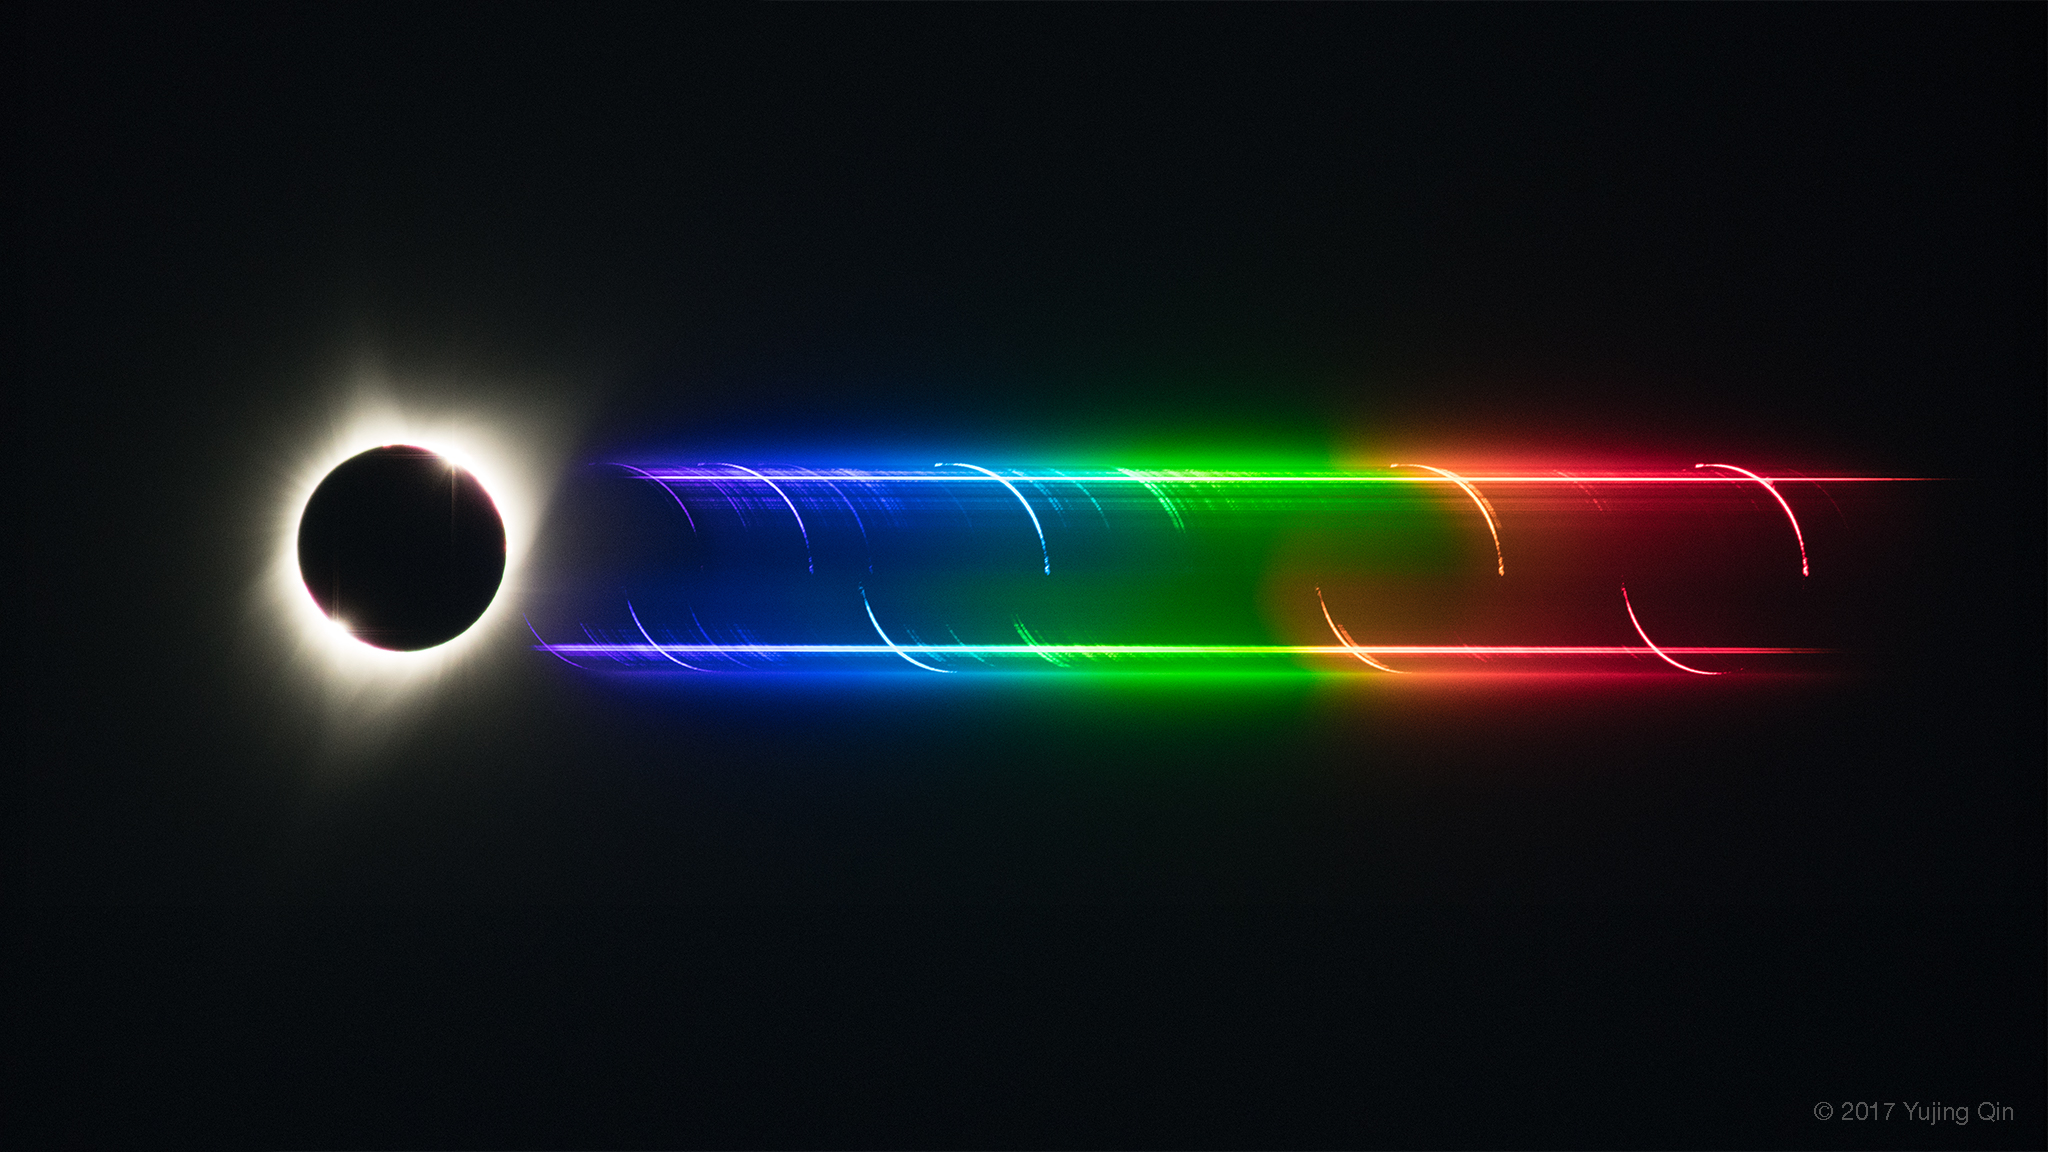 The Flash Spectrum Of The Sun 48 1152 Spaceporn